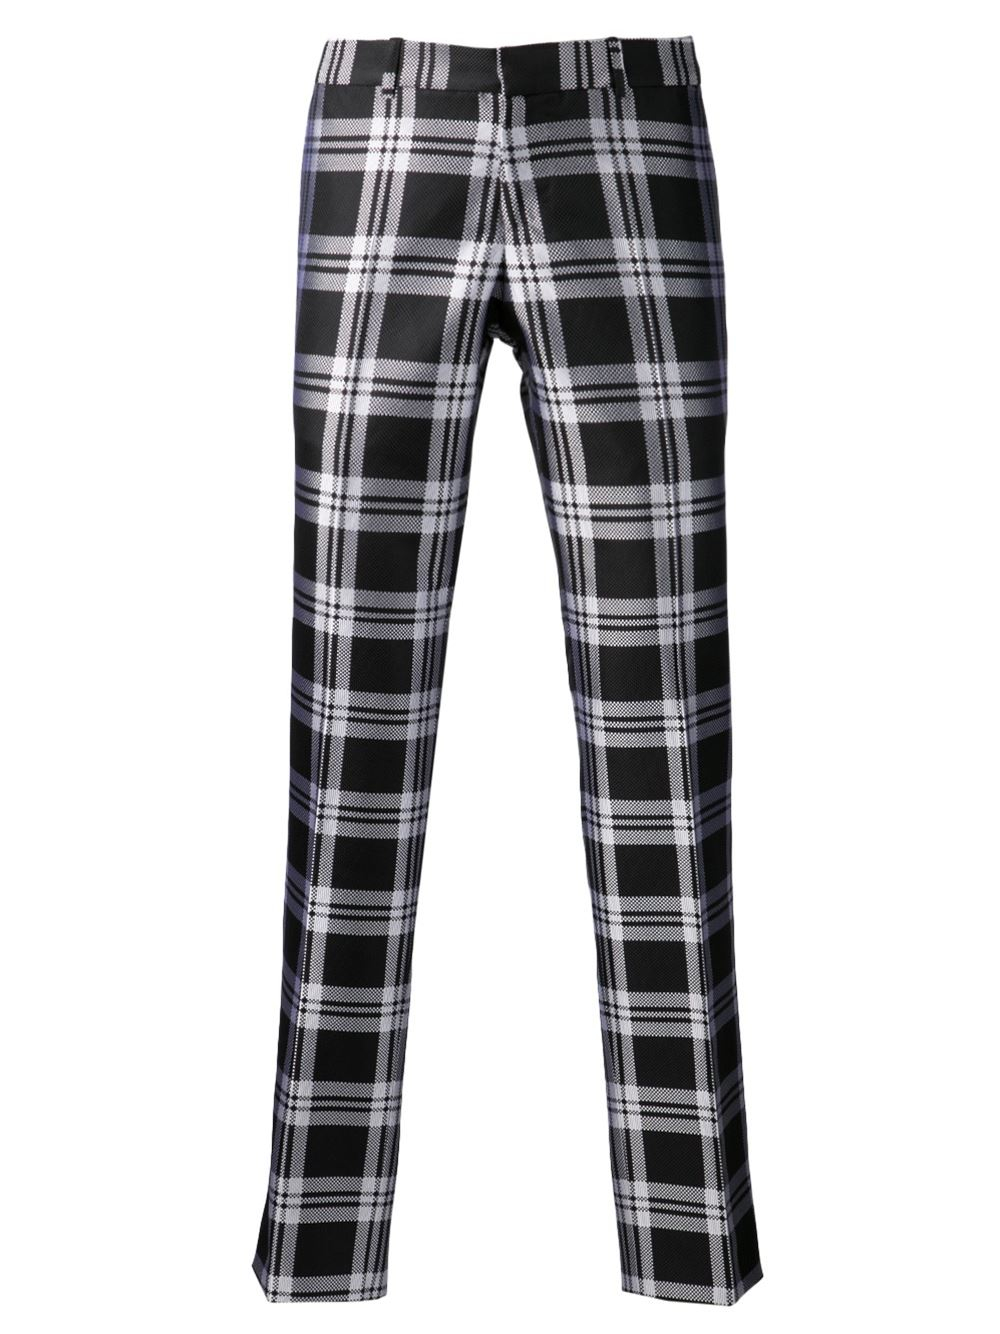 black and white plaid pants mens